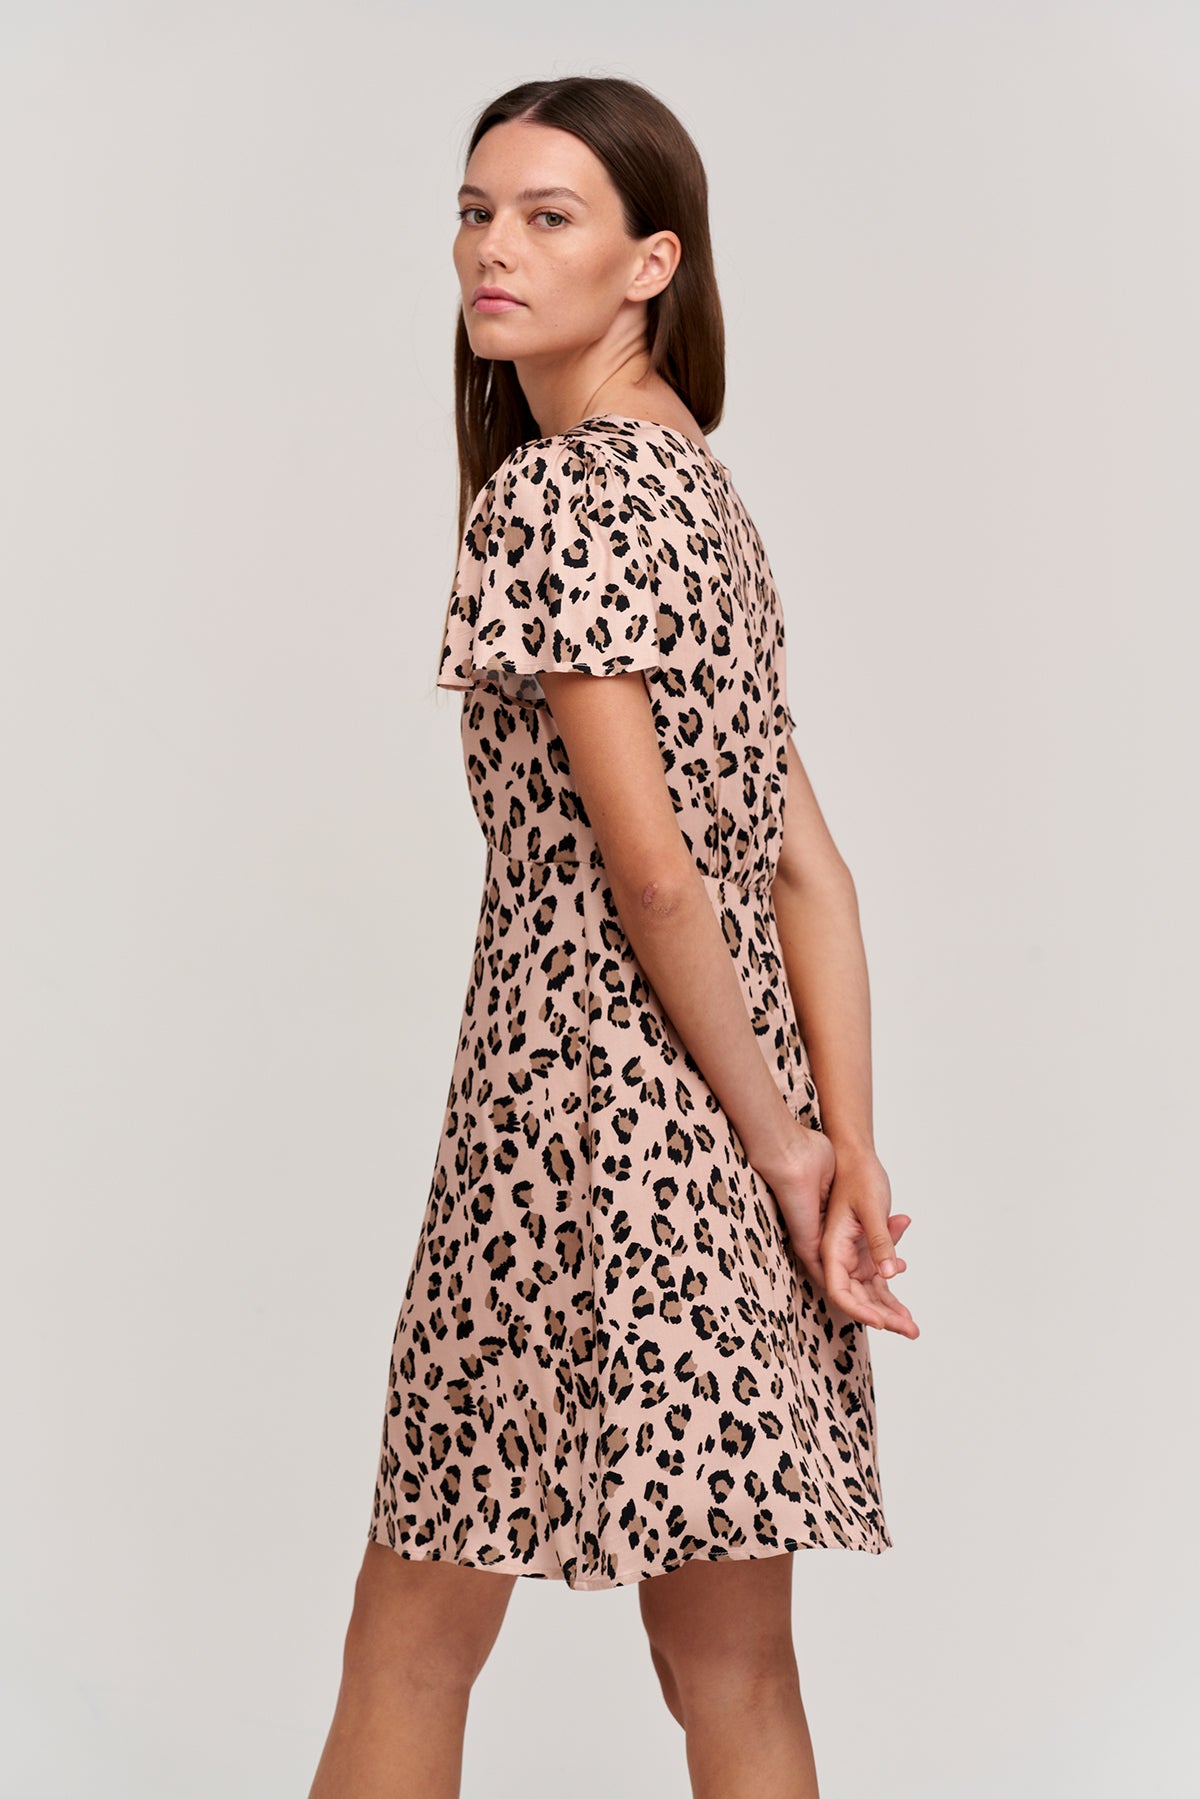 Drew Cheetah Print Dress in blush side and back-25052881453249